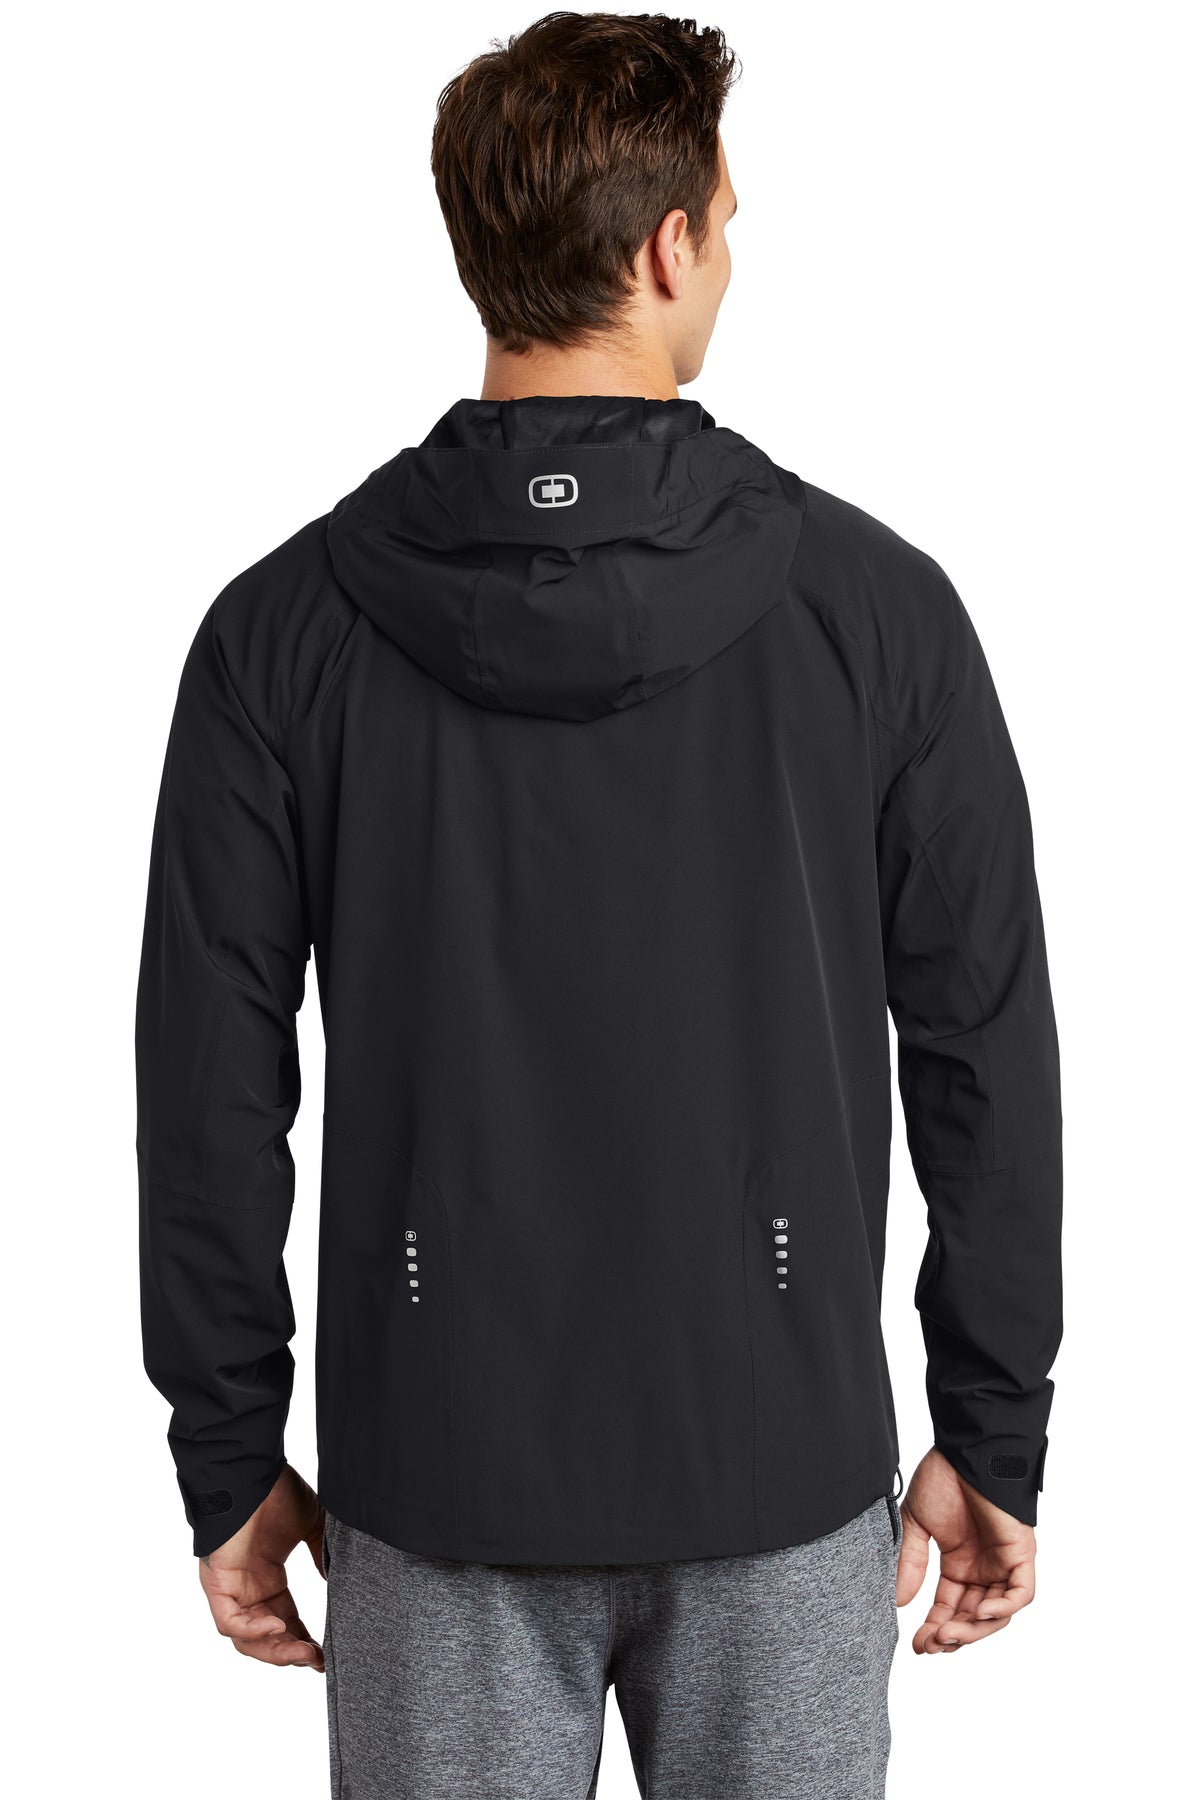 ogio endurance_oe750 _blacktop_company_logo_jackets